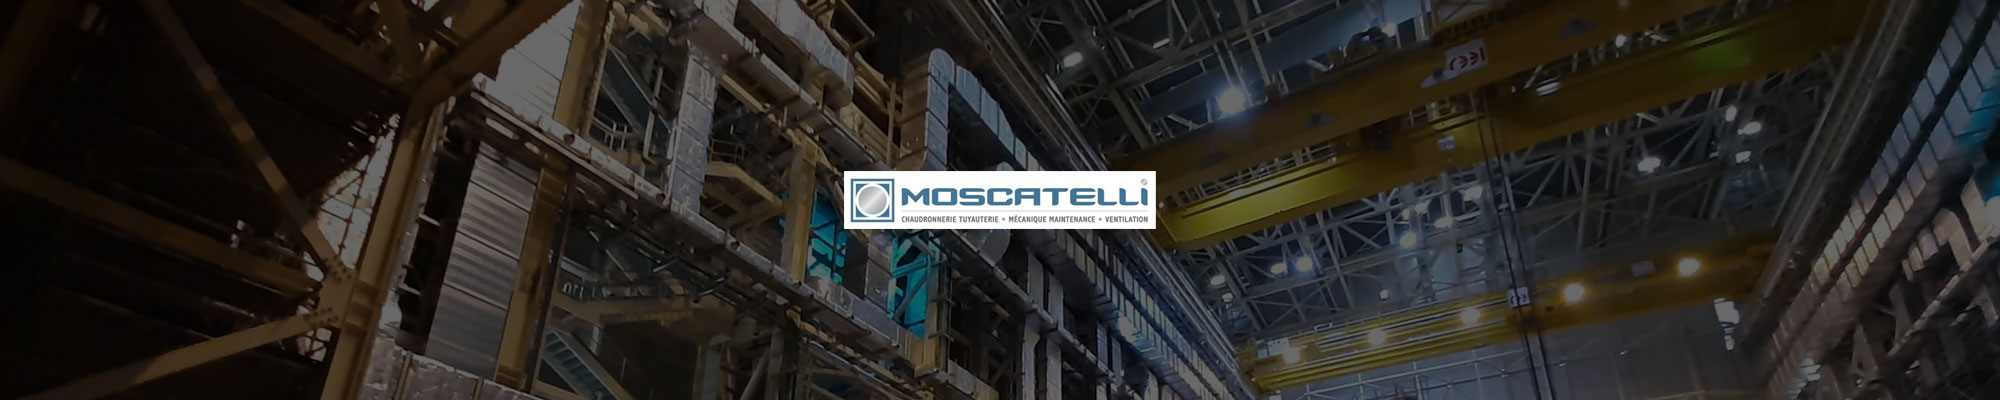 Groupe Moscatelli